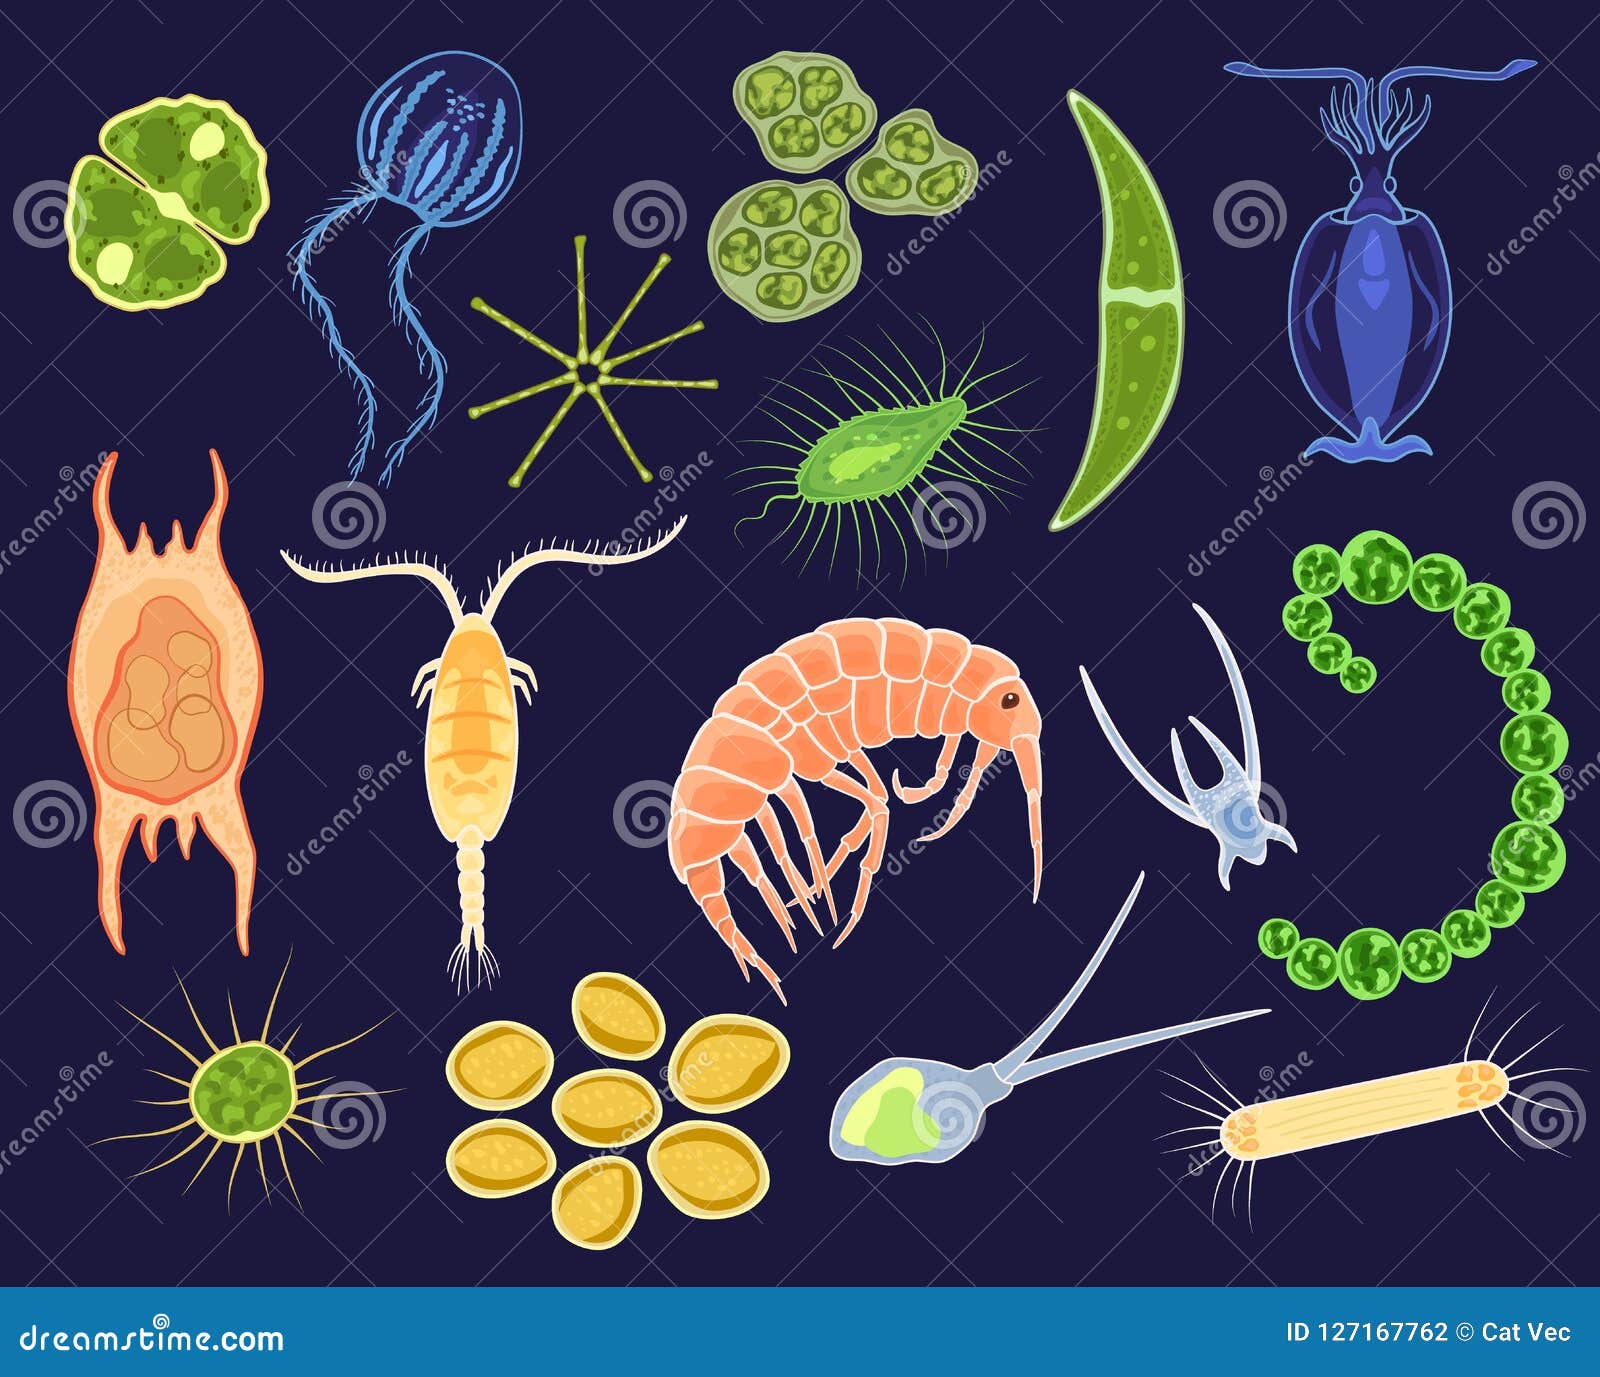 plankton  aquatic phytoplankton and planktonic microorganism under microscope in ocean  set of micro